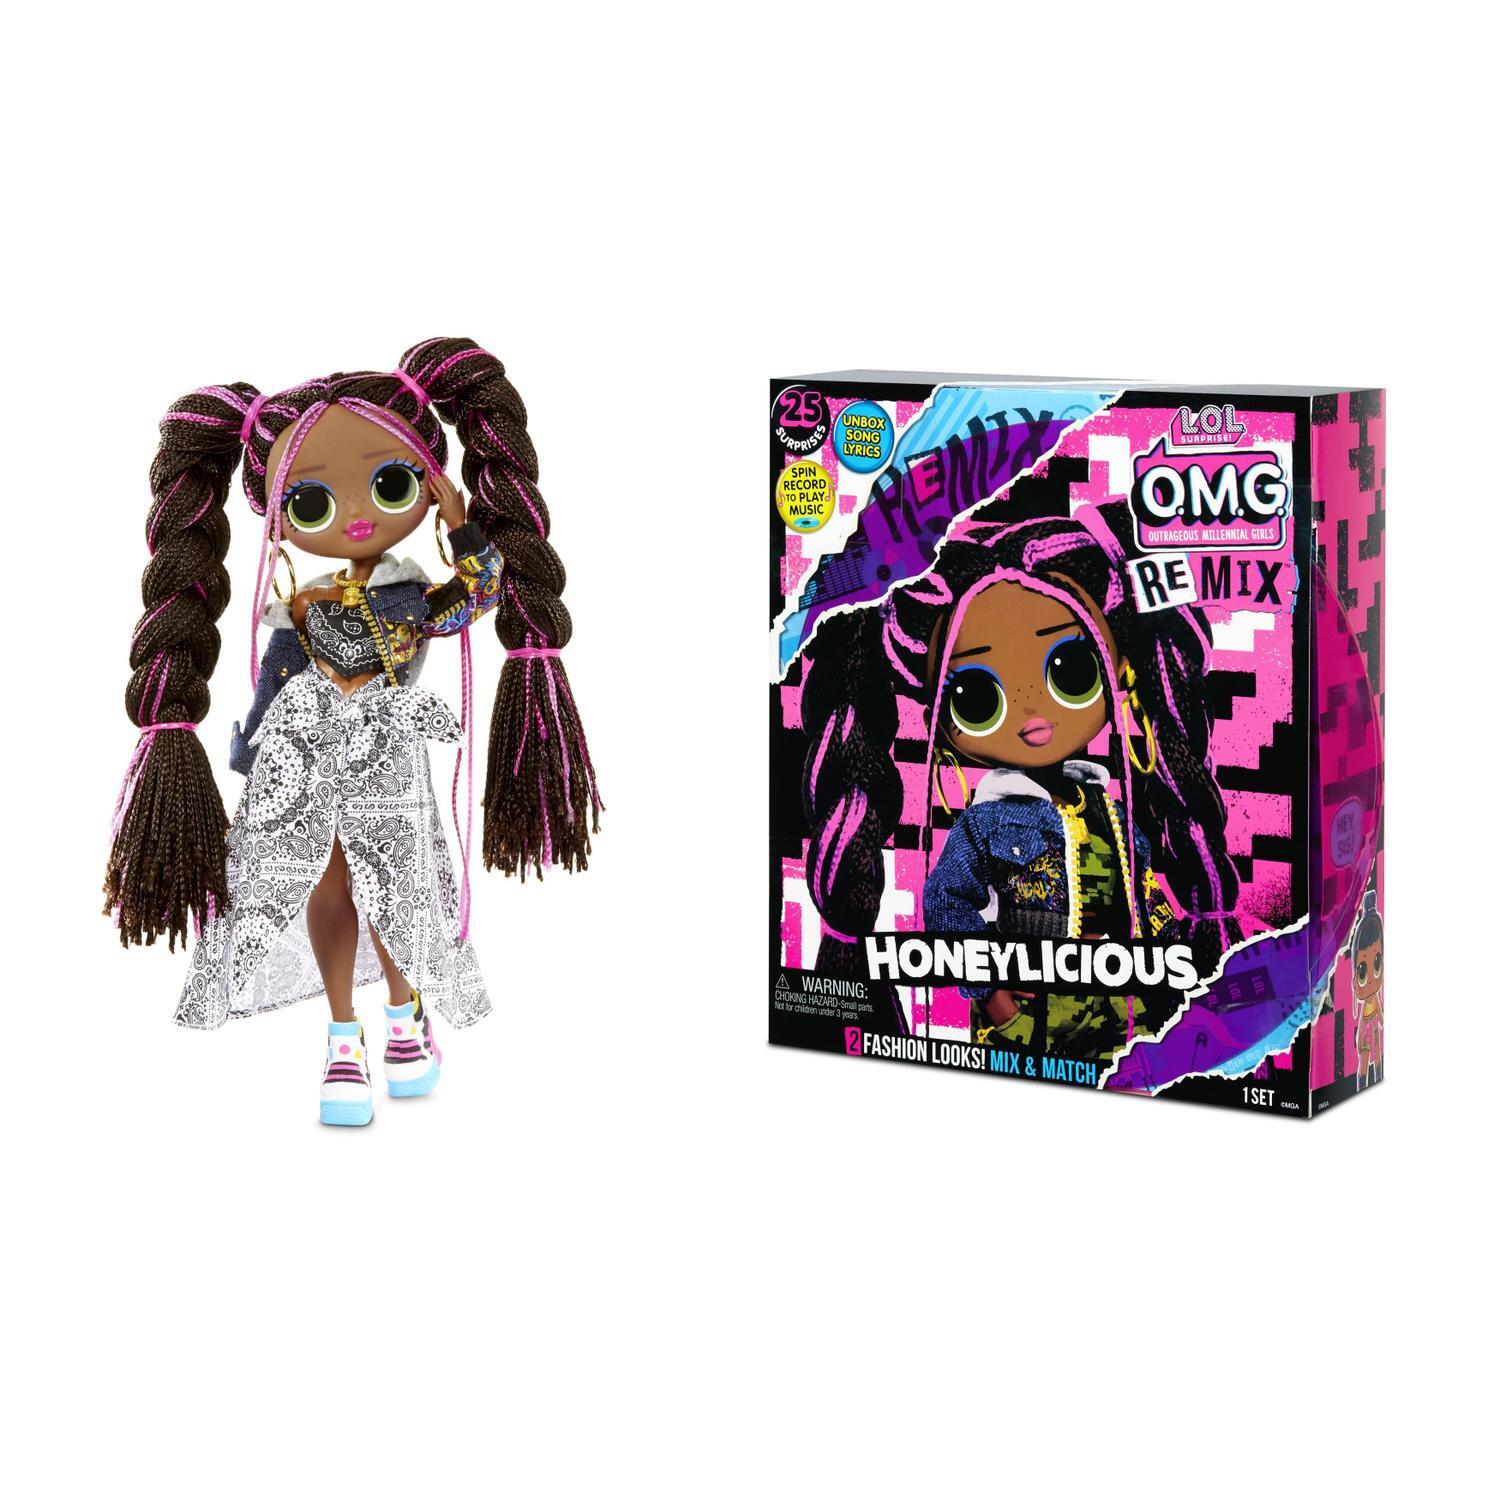 L.O.L. Surprise OMG Remix Honeylicious doll | Elgiganten